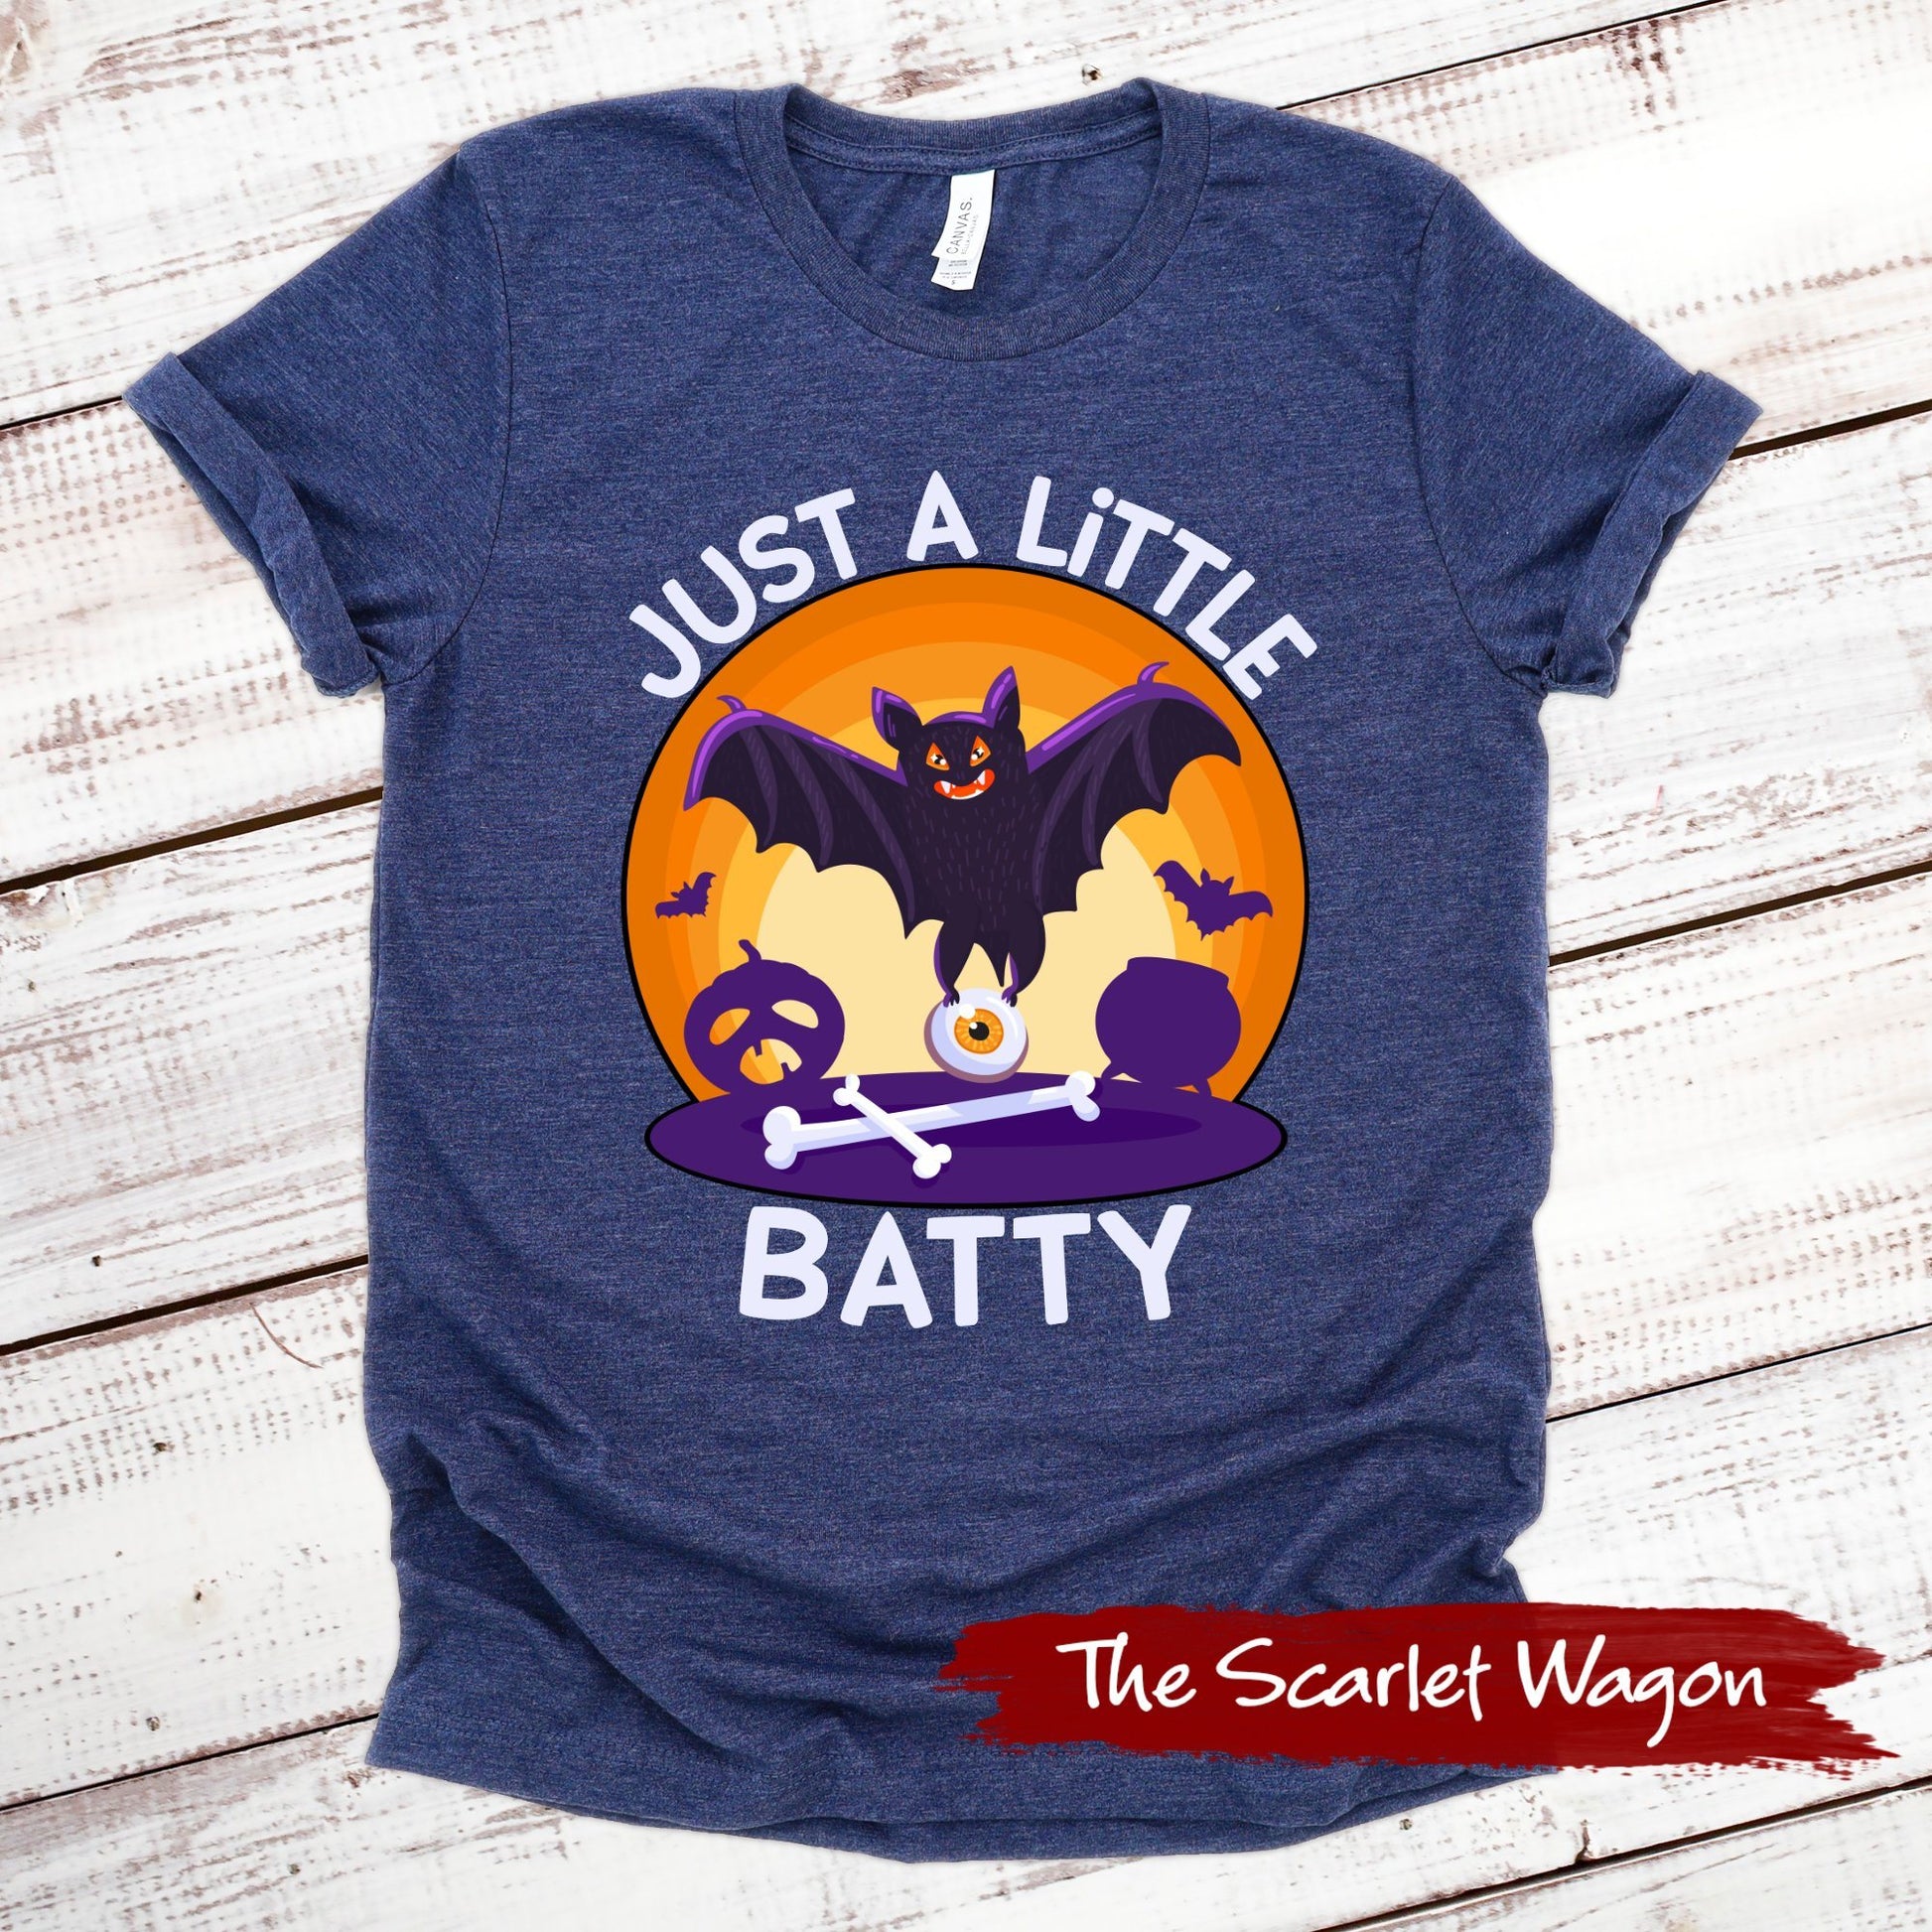 Just a Little Batty Halloween Shirt Scarlet Wagon Heather Navy XS 